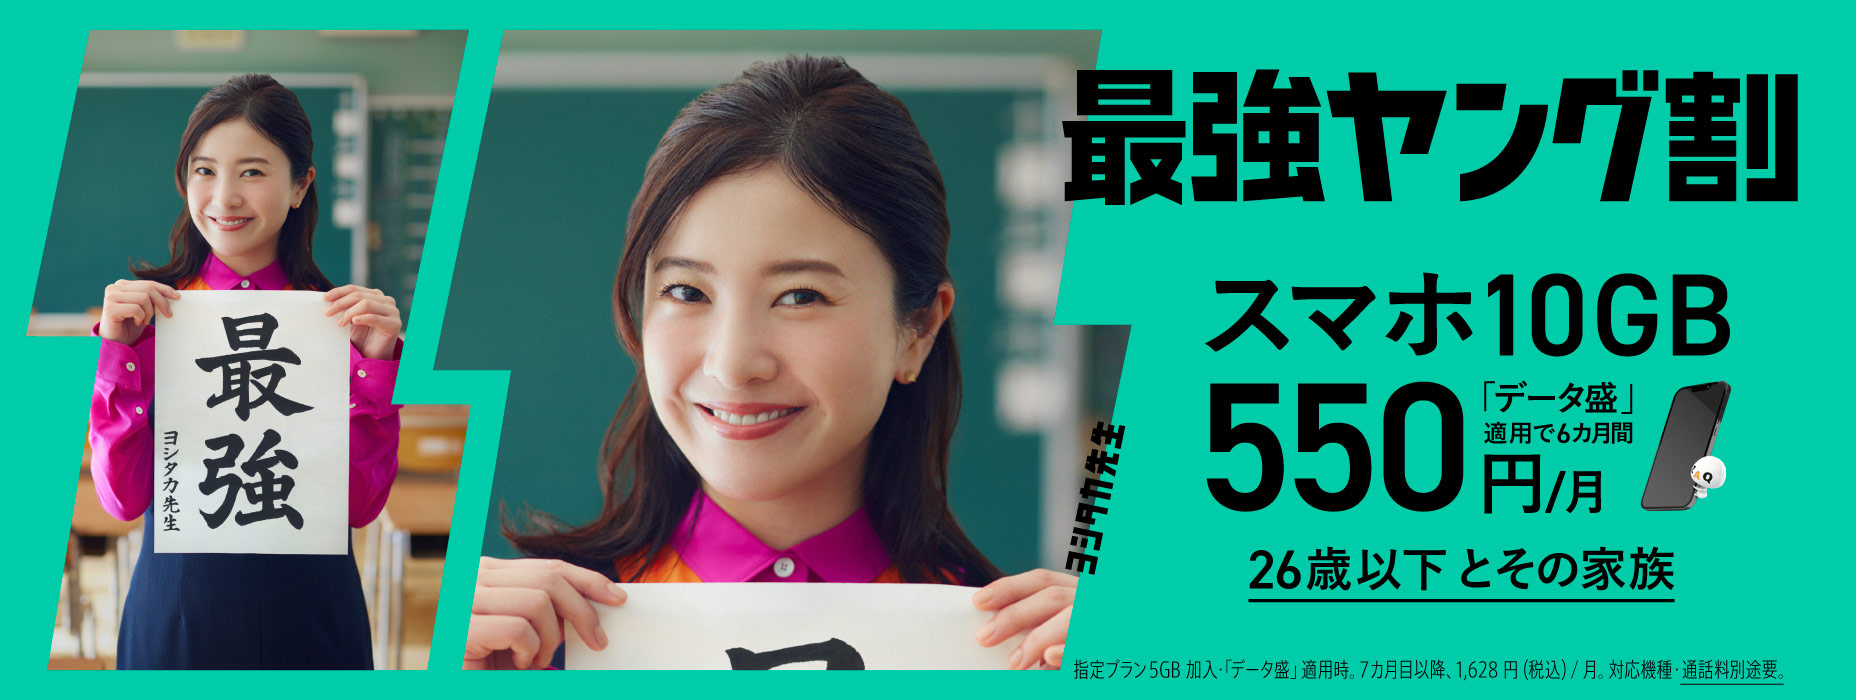 10GB 550 yen per month! J:COM MOBILE Saikyo Young Wari